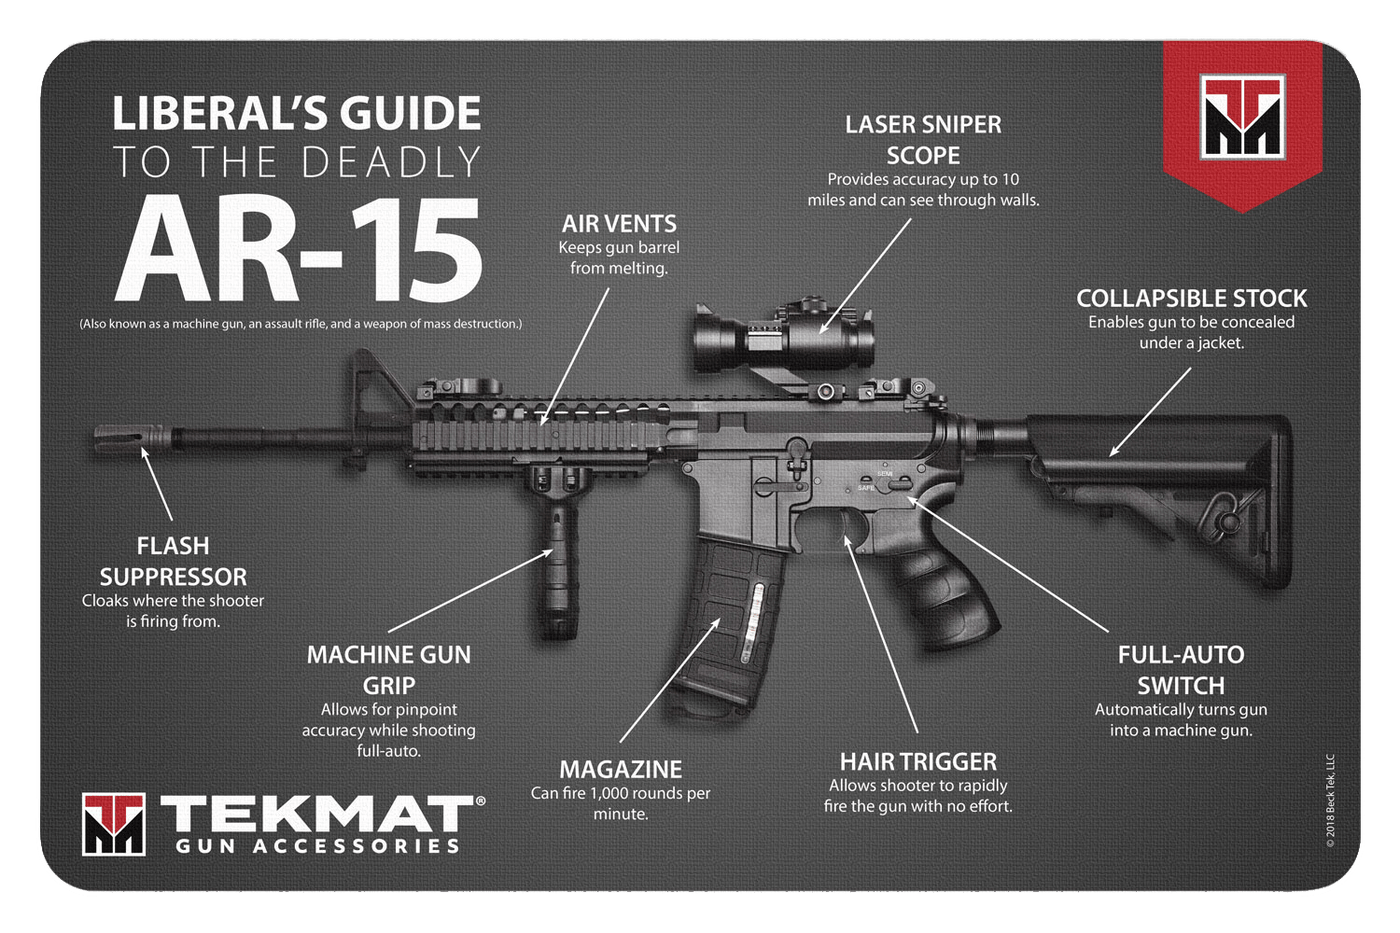 BECK TEK, LLC (TEKMAT) Tekmat Armorers Bench Mat - 11"x17" Ar-15 Liberal's Guide Gun Care